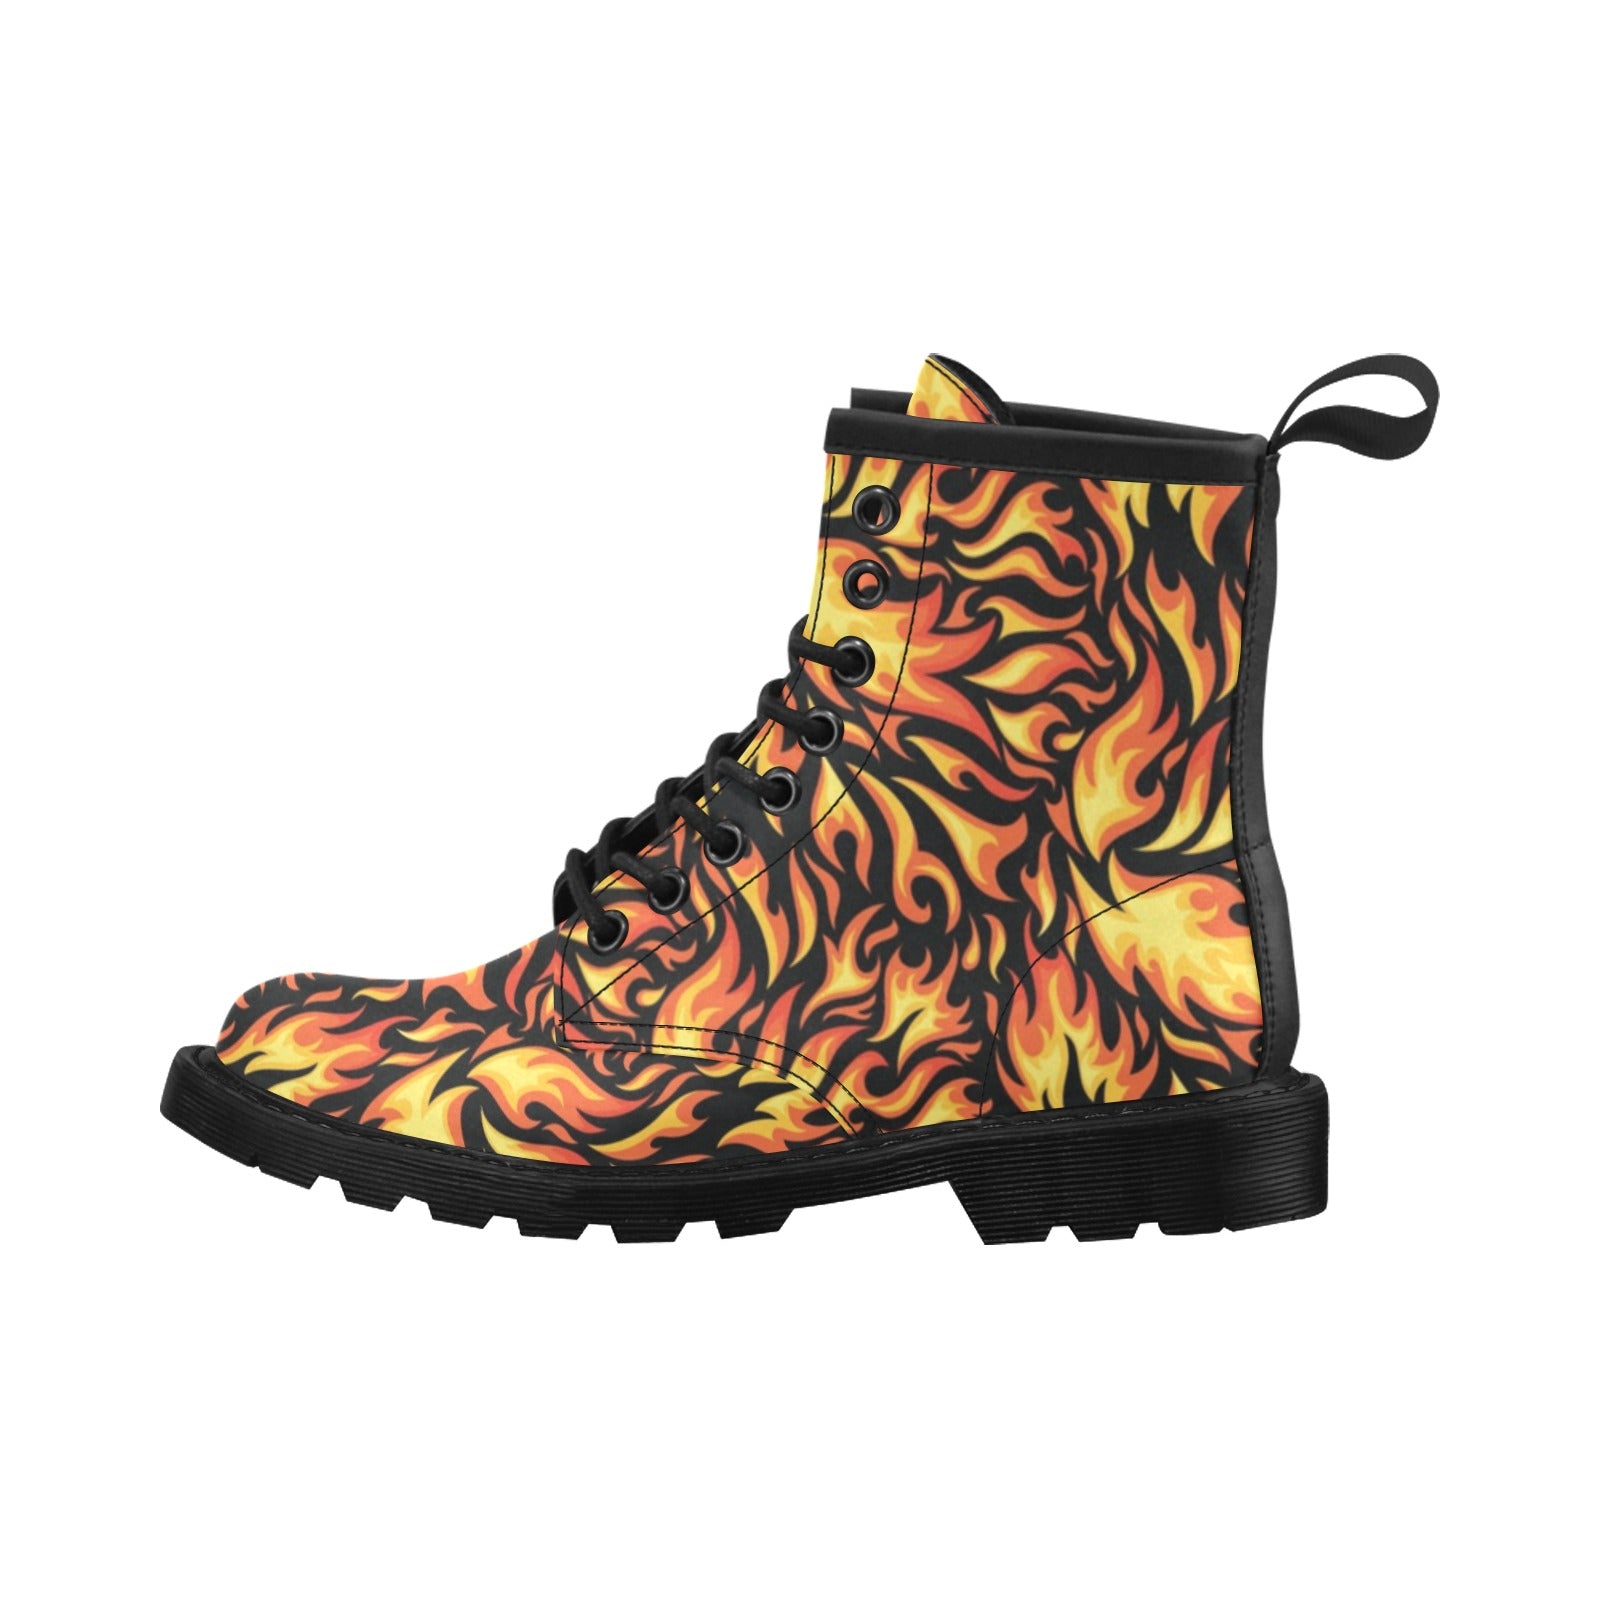 Flame Fire Design Pattern Women's Boots